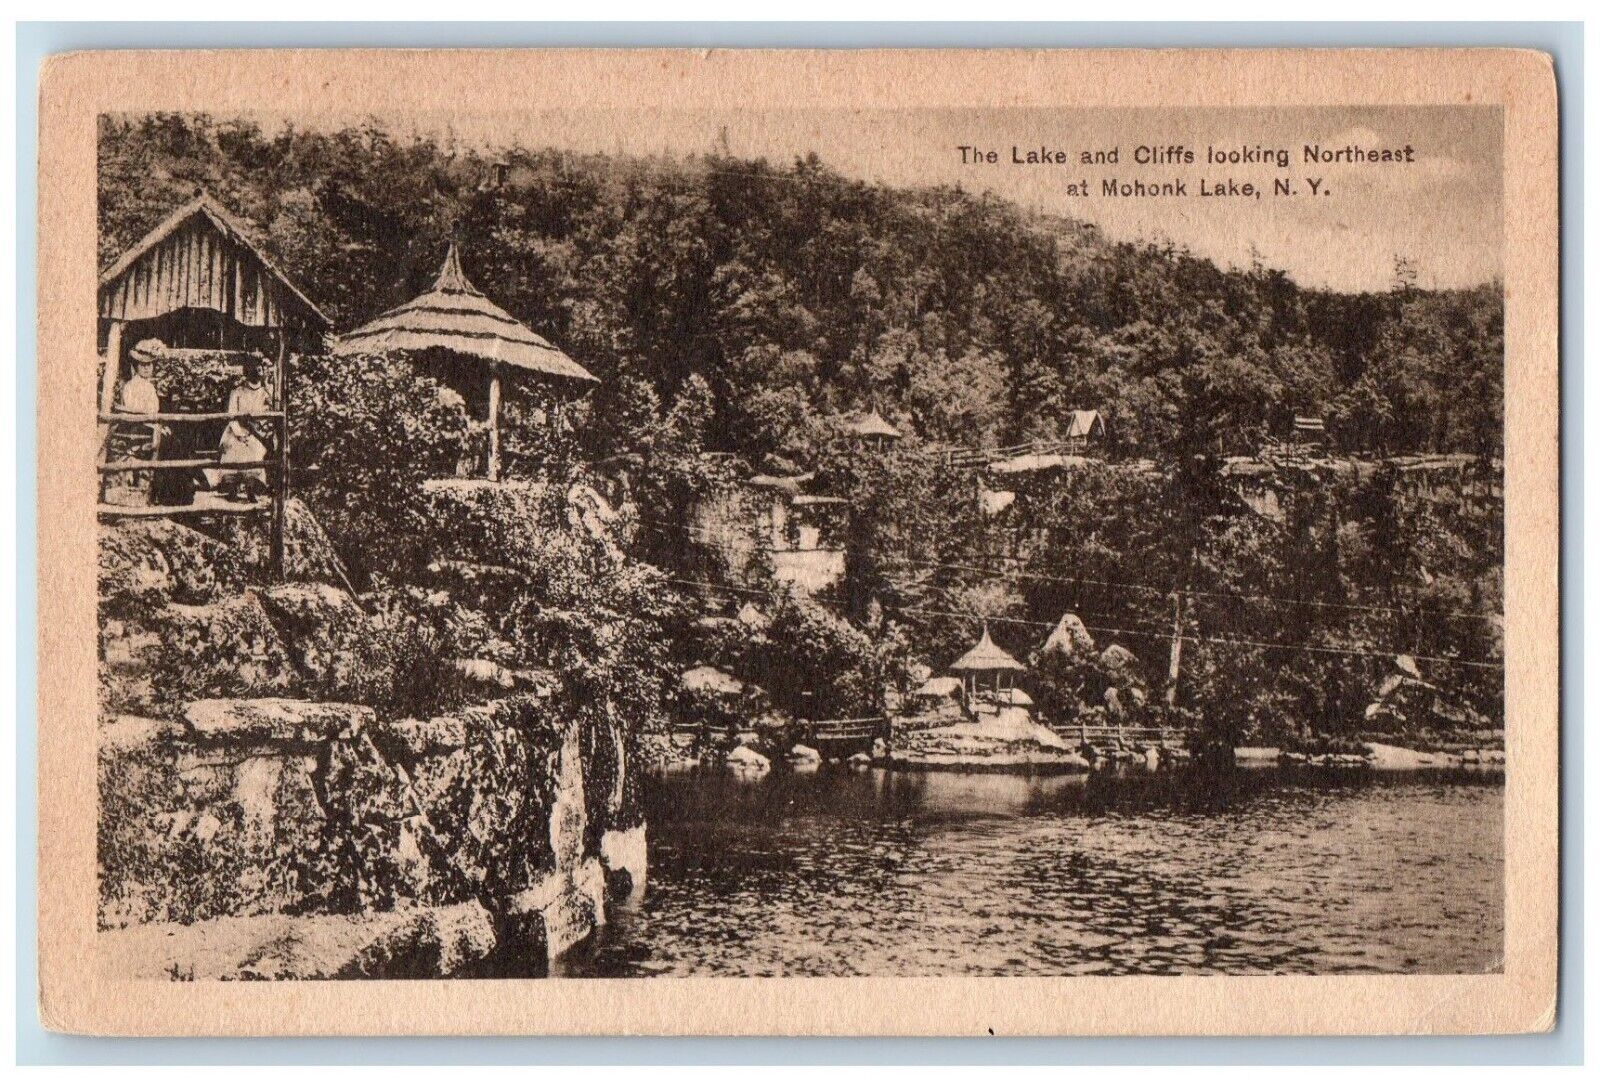 Mohonk Lake New York Postcard Lake Cliffs Looking Northeast 1915 Vintage Antique